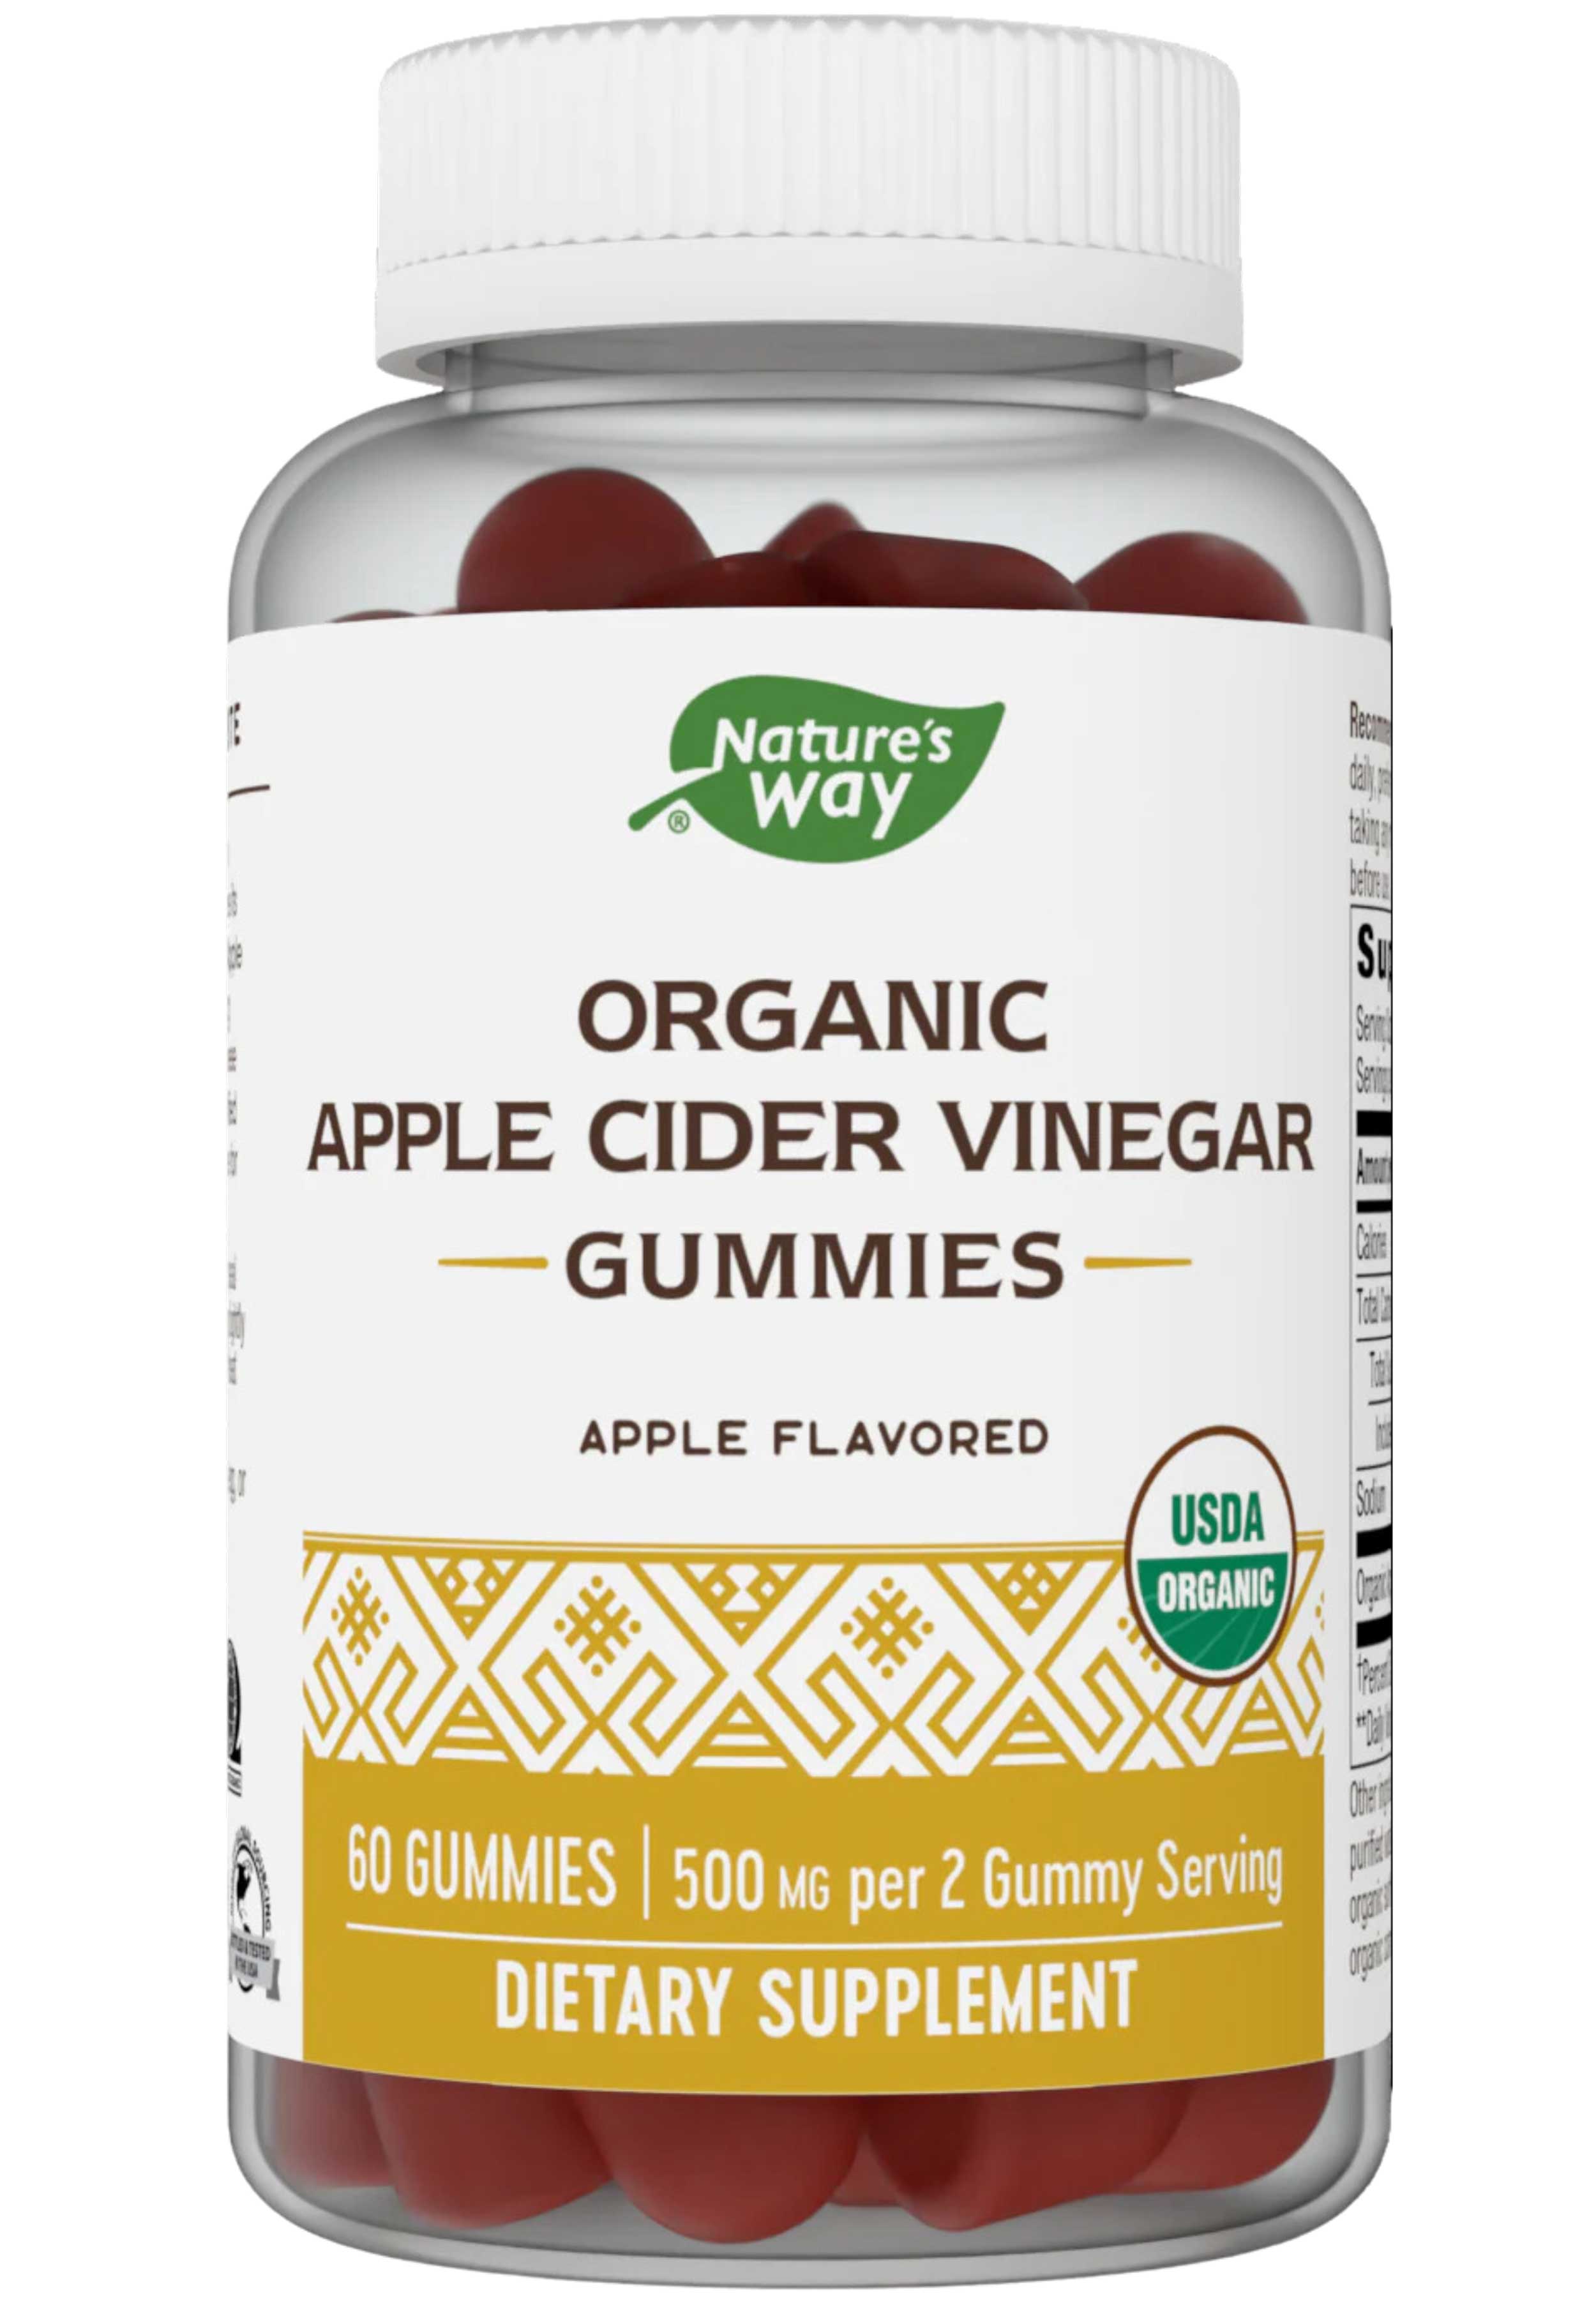 Nature's Way Organic Apple Cider Vinegar Gummies